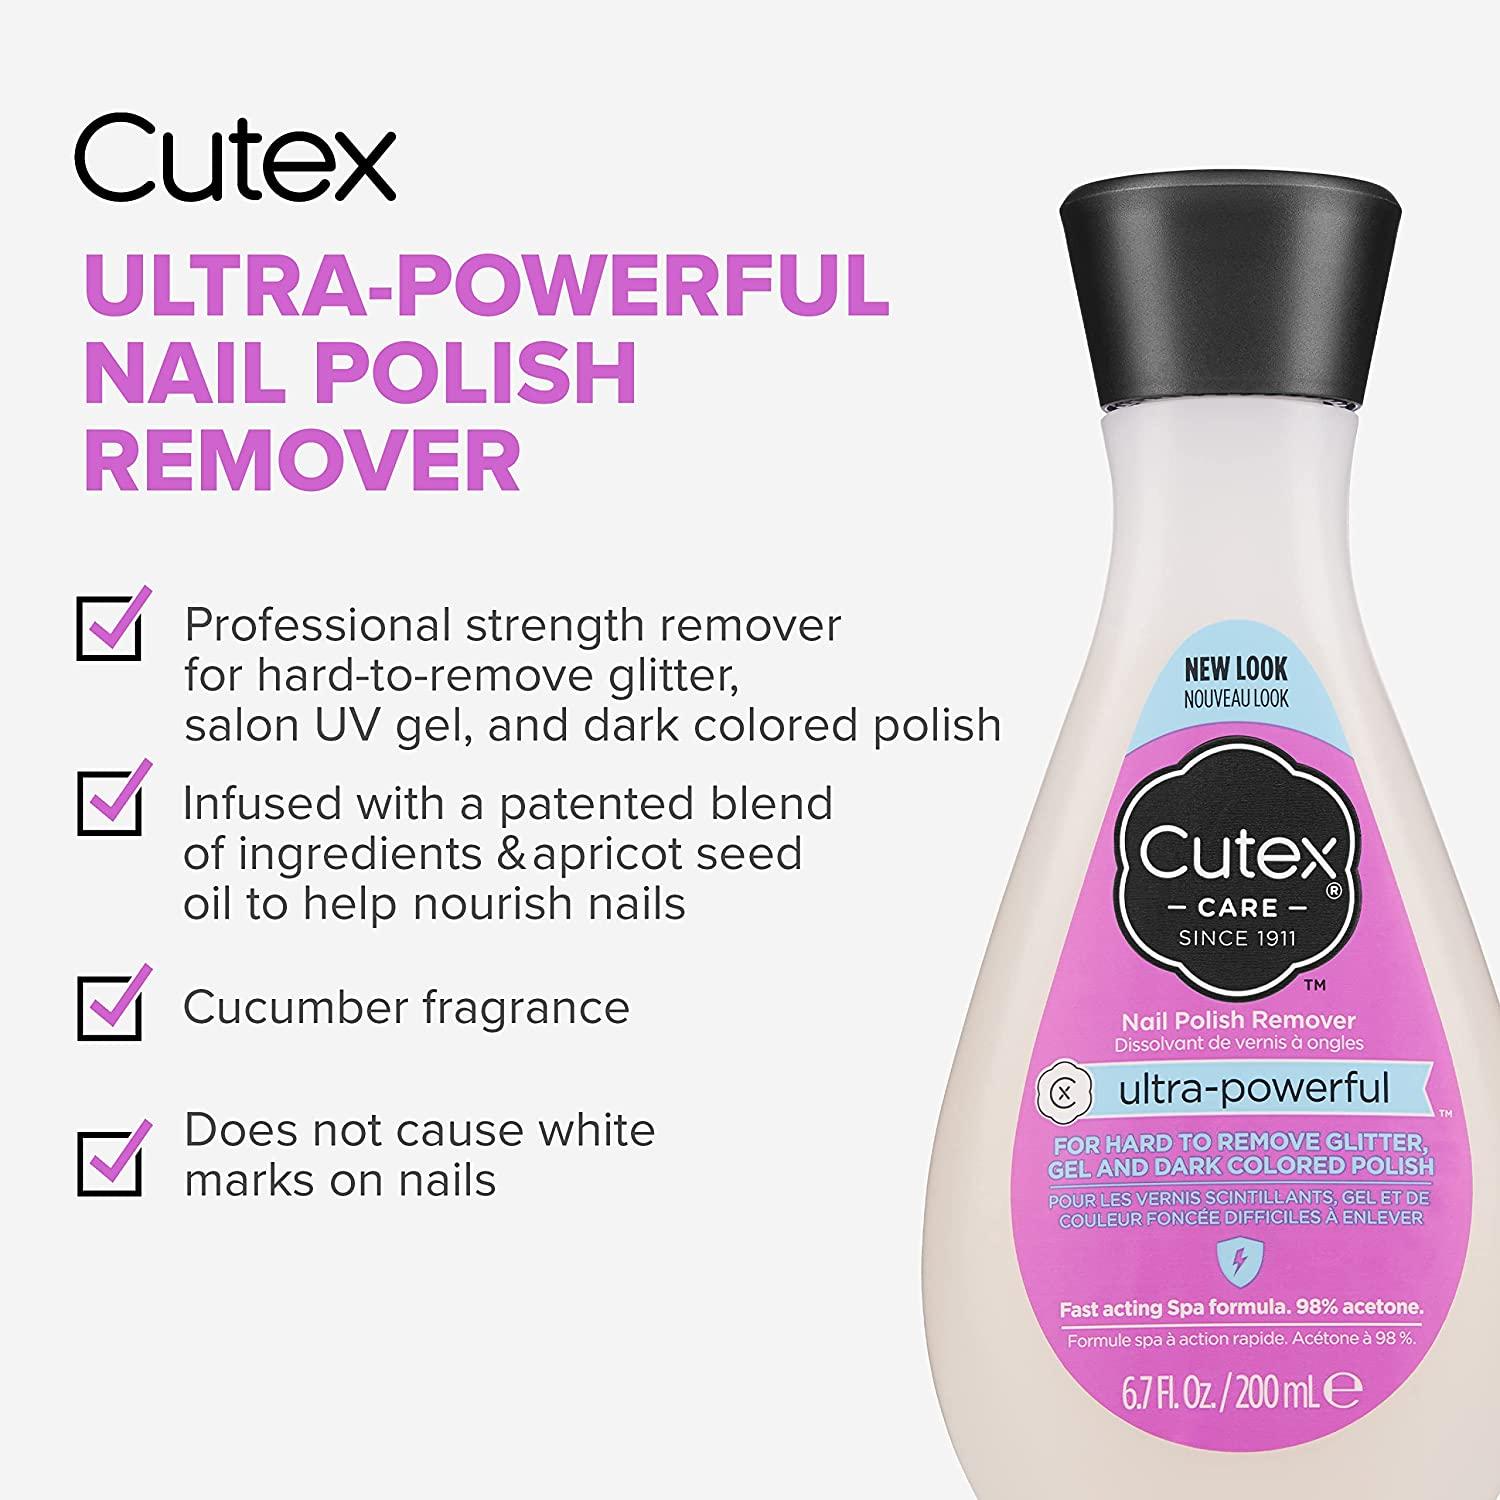 Cutex Cutex Regular Nail Polish Remover Pads - 10 Ct | Hy-Vee Aisles Online  Grocery Shopping